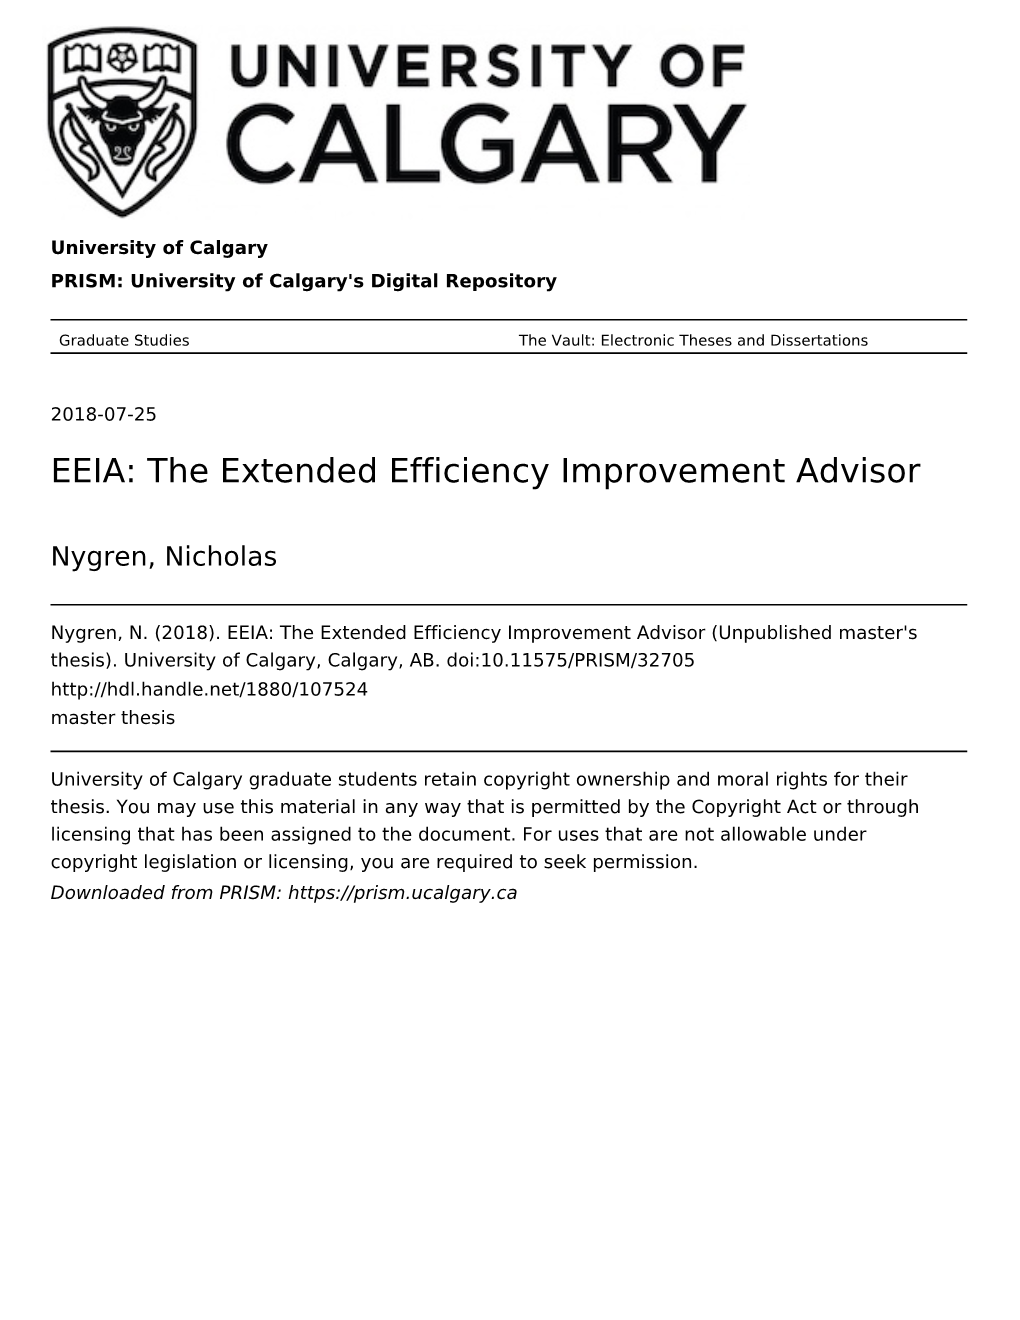 The Extended Efficiency Improvement Advisor